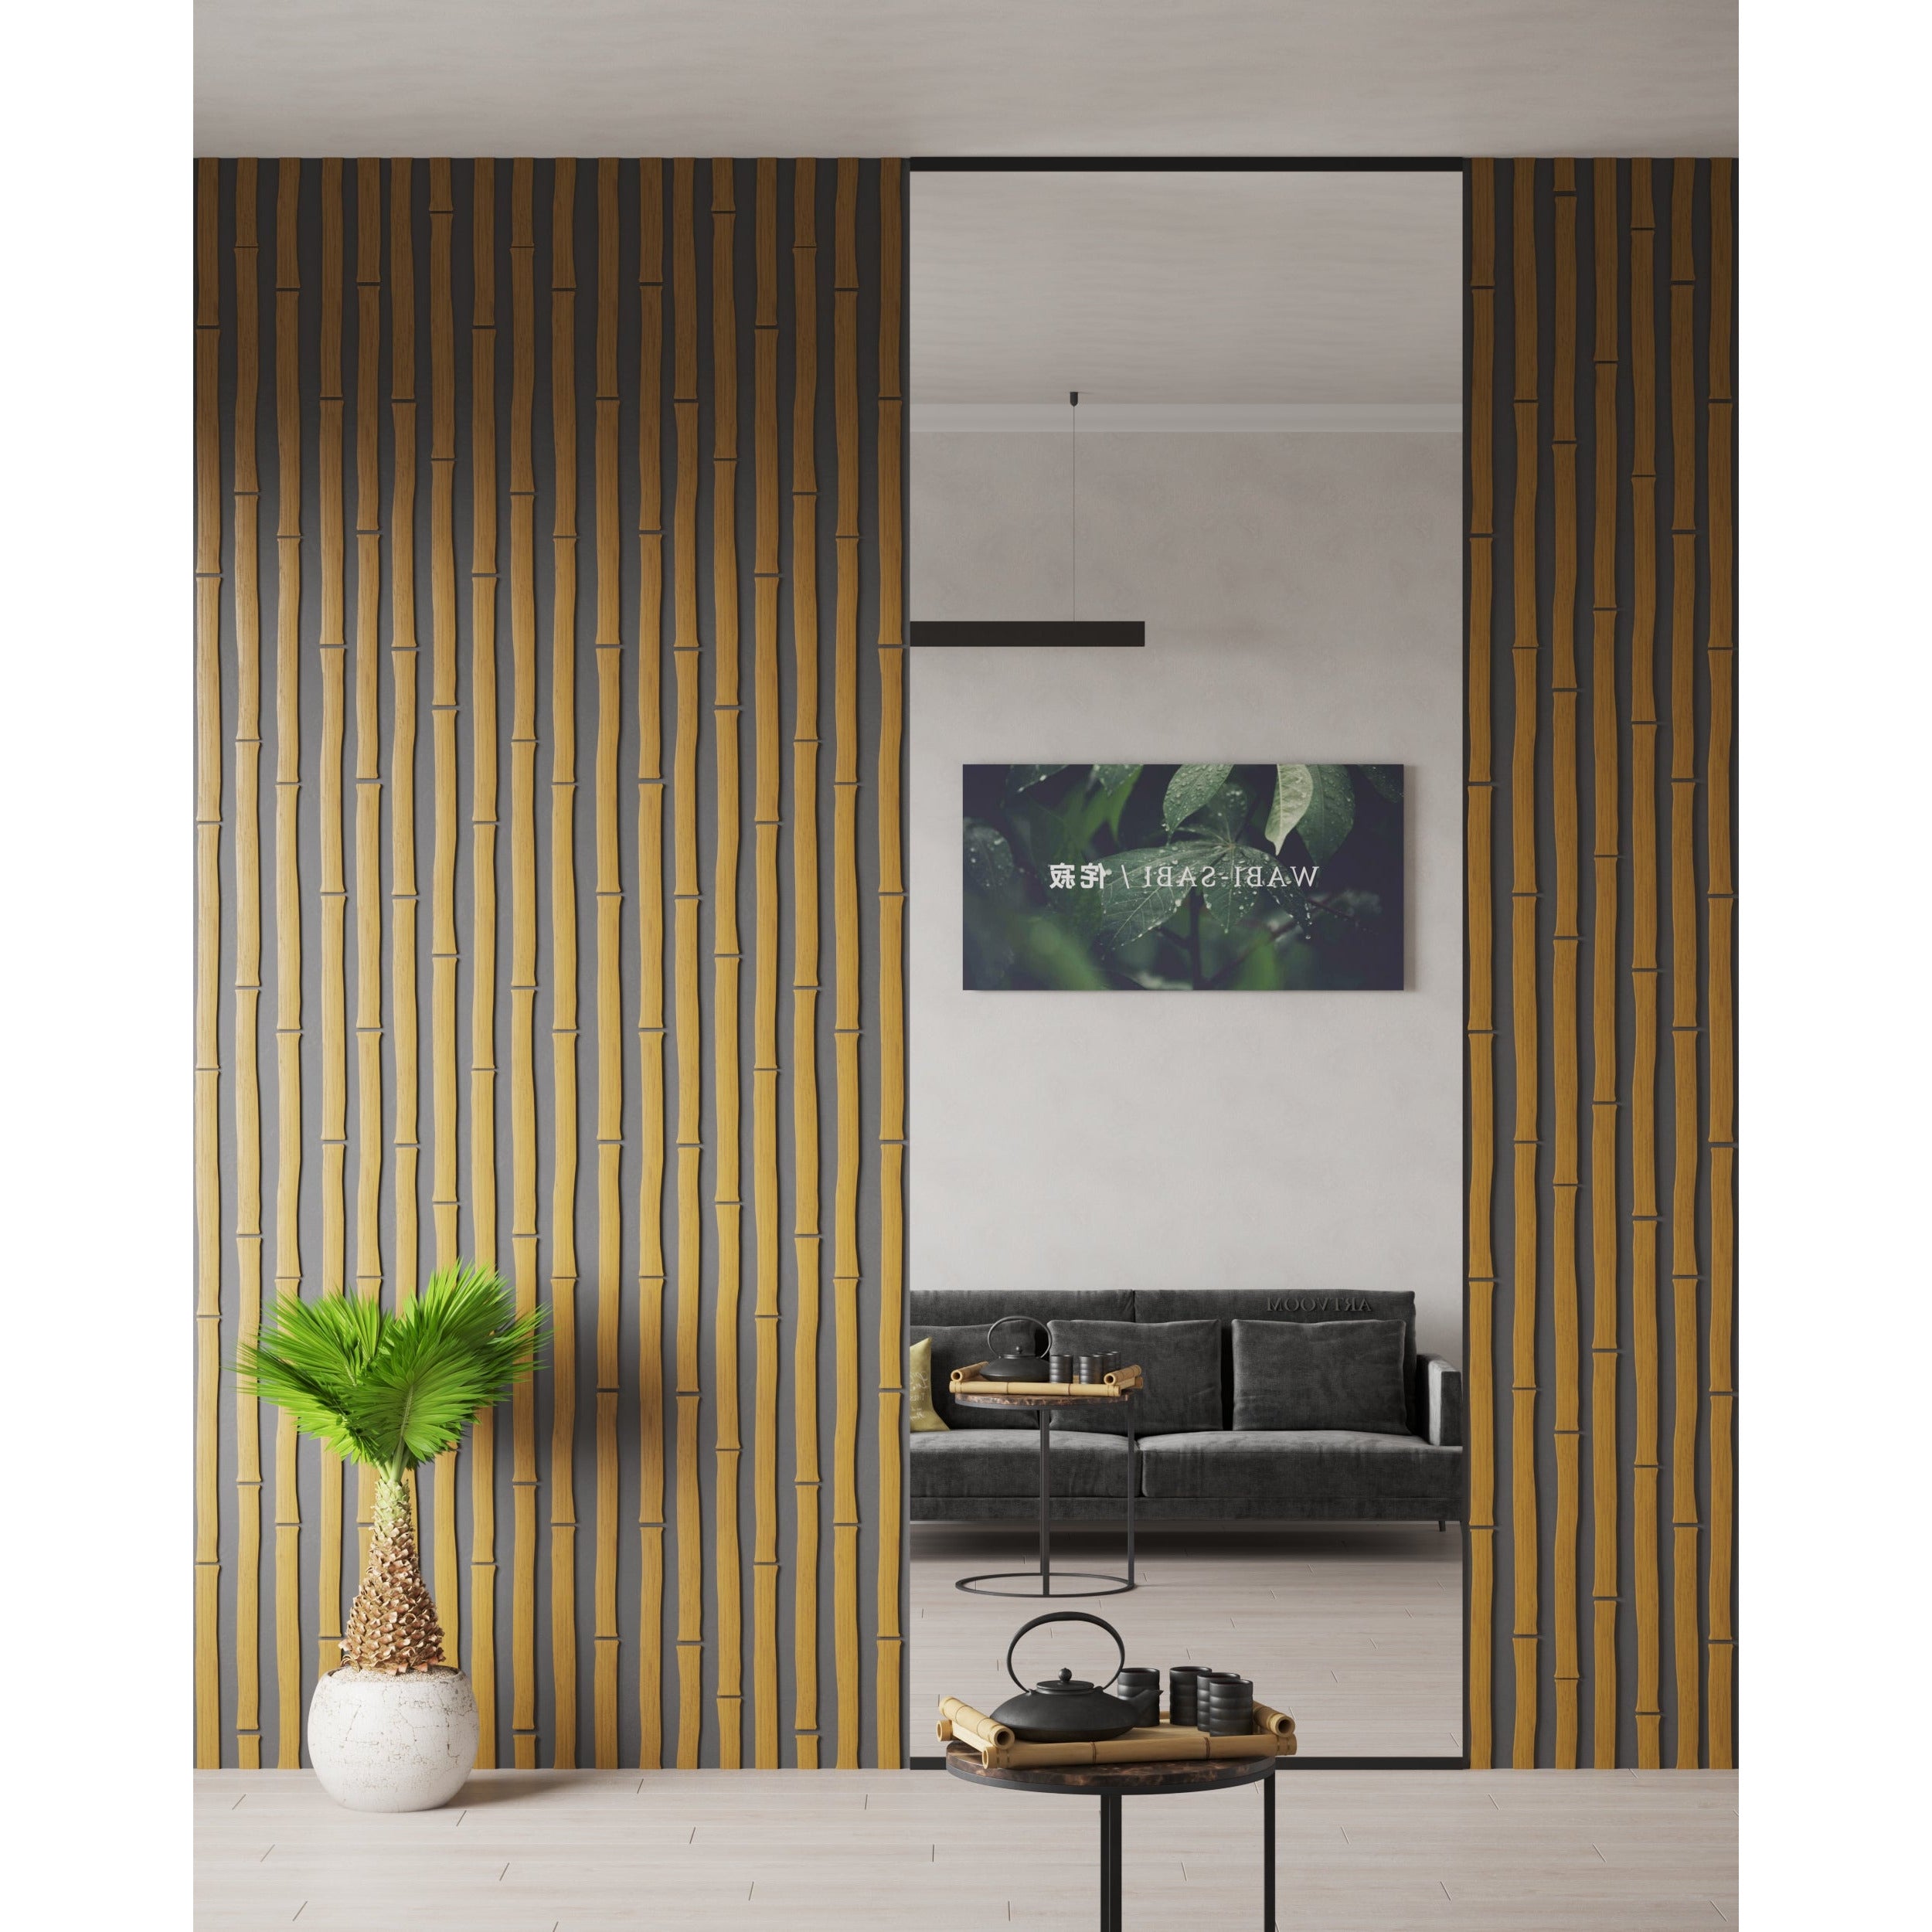 Oil Oak Bamboo Panel Wall Slats, 24 pcs in box. Artvoom Wall Décor - Artvoom